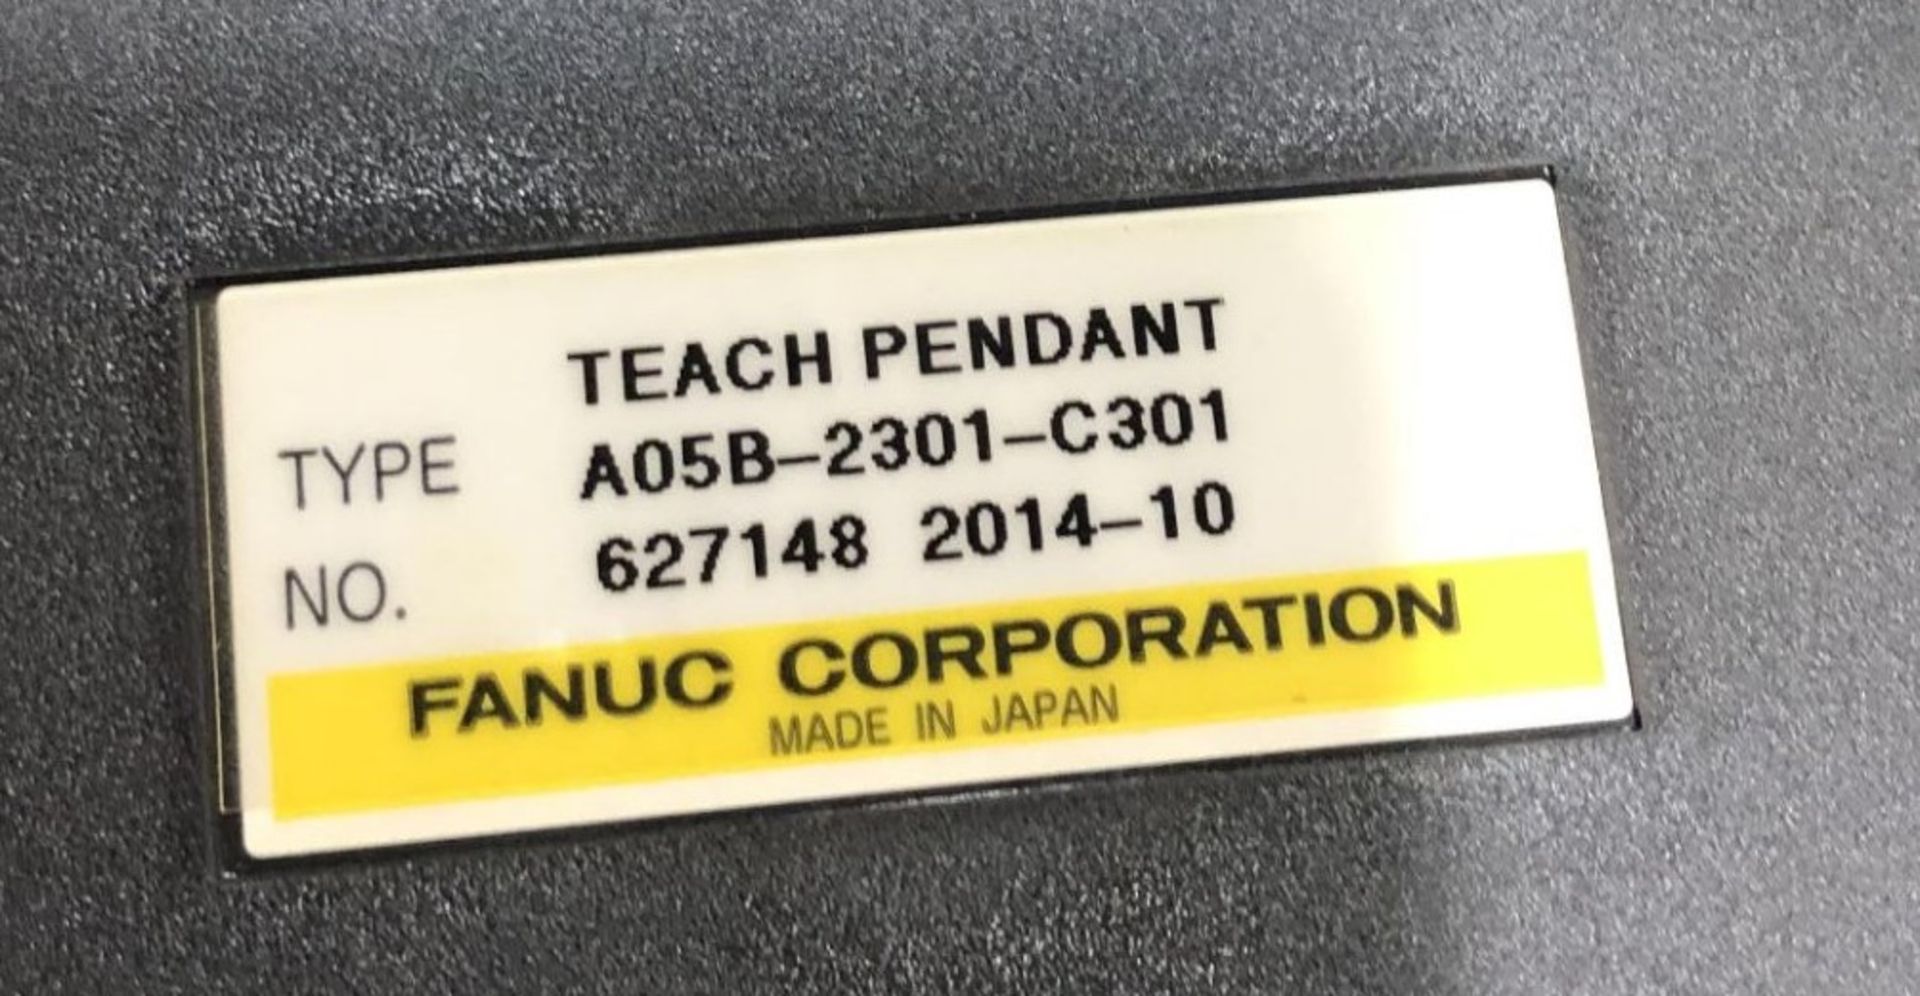 NEW IN BOX Fanuc Teach Pendant, A05B-2301-C301 - Image 4 of 4